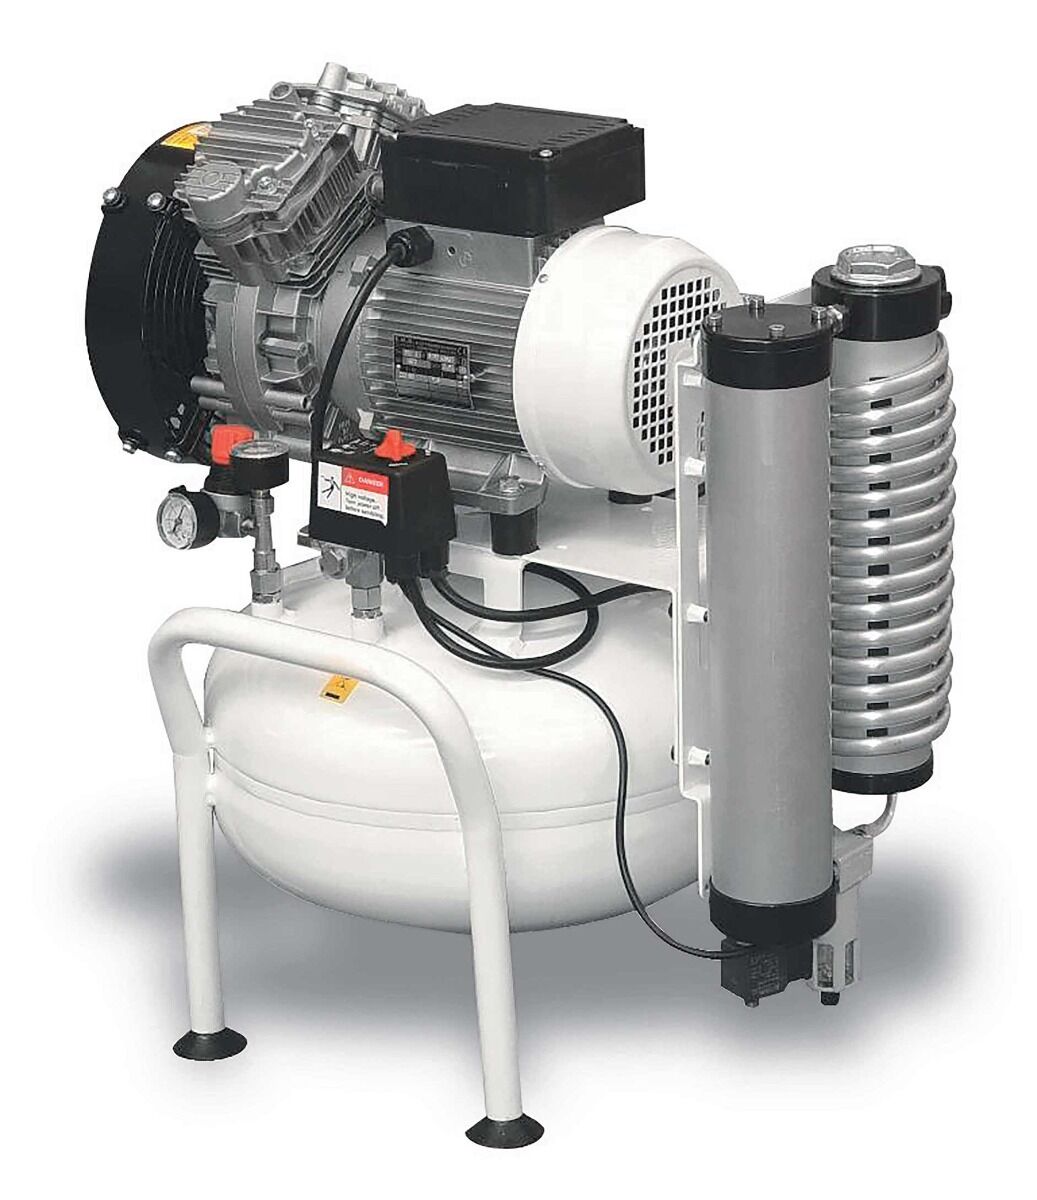 CLEANAIR compressore oil-free CLR 15/25 T 1.5HP 25L (230V)